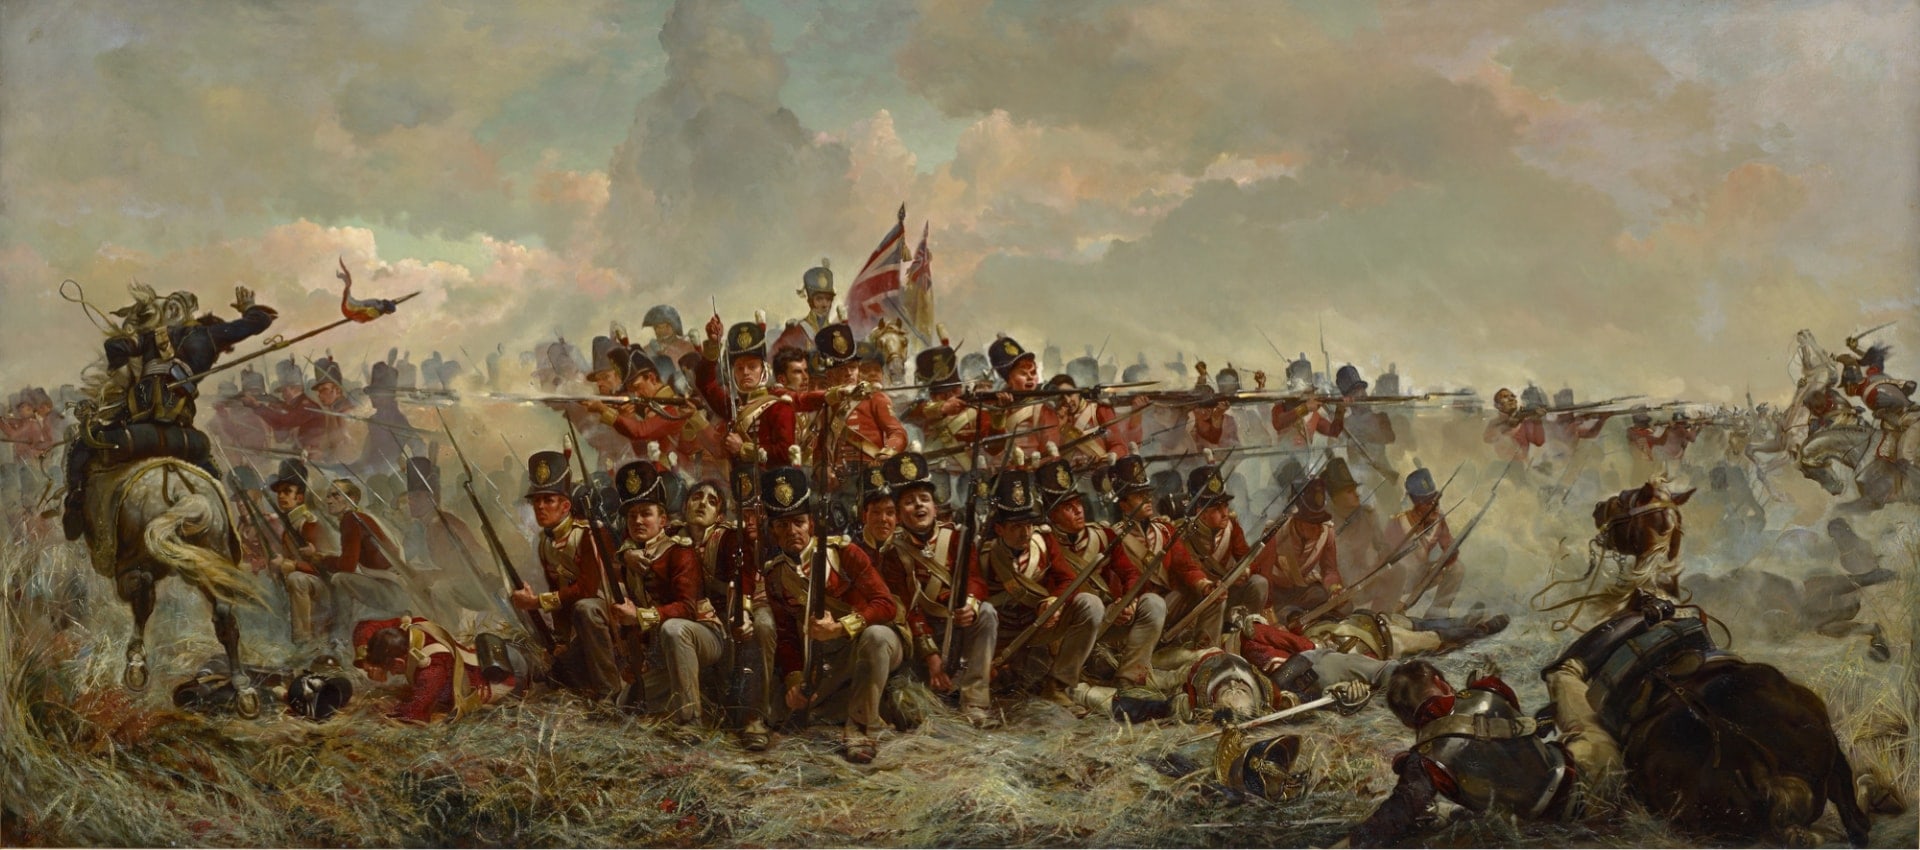 Elizabeth THOMPSON <em>The 28th Regiment at Quatre Bras </em>1875 oil on canvas 97.2 x 216.2 cm National Gallery of Victoria, Melbourne Purchased, 1884 p.309.9-1